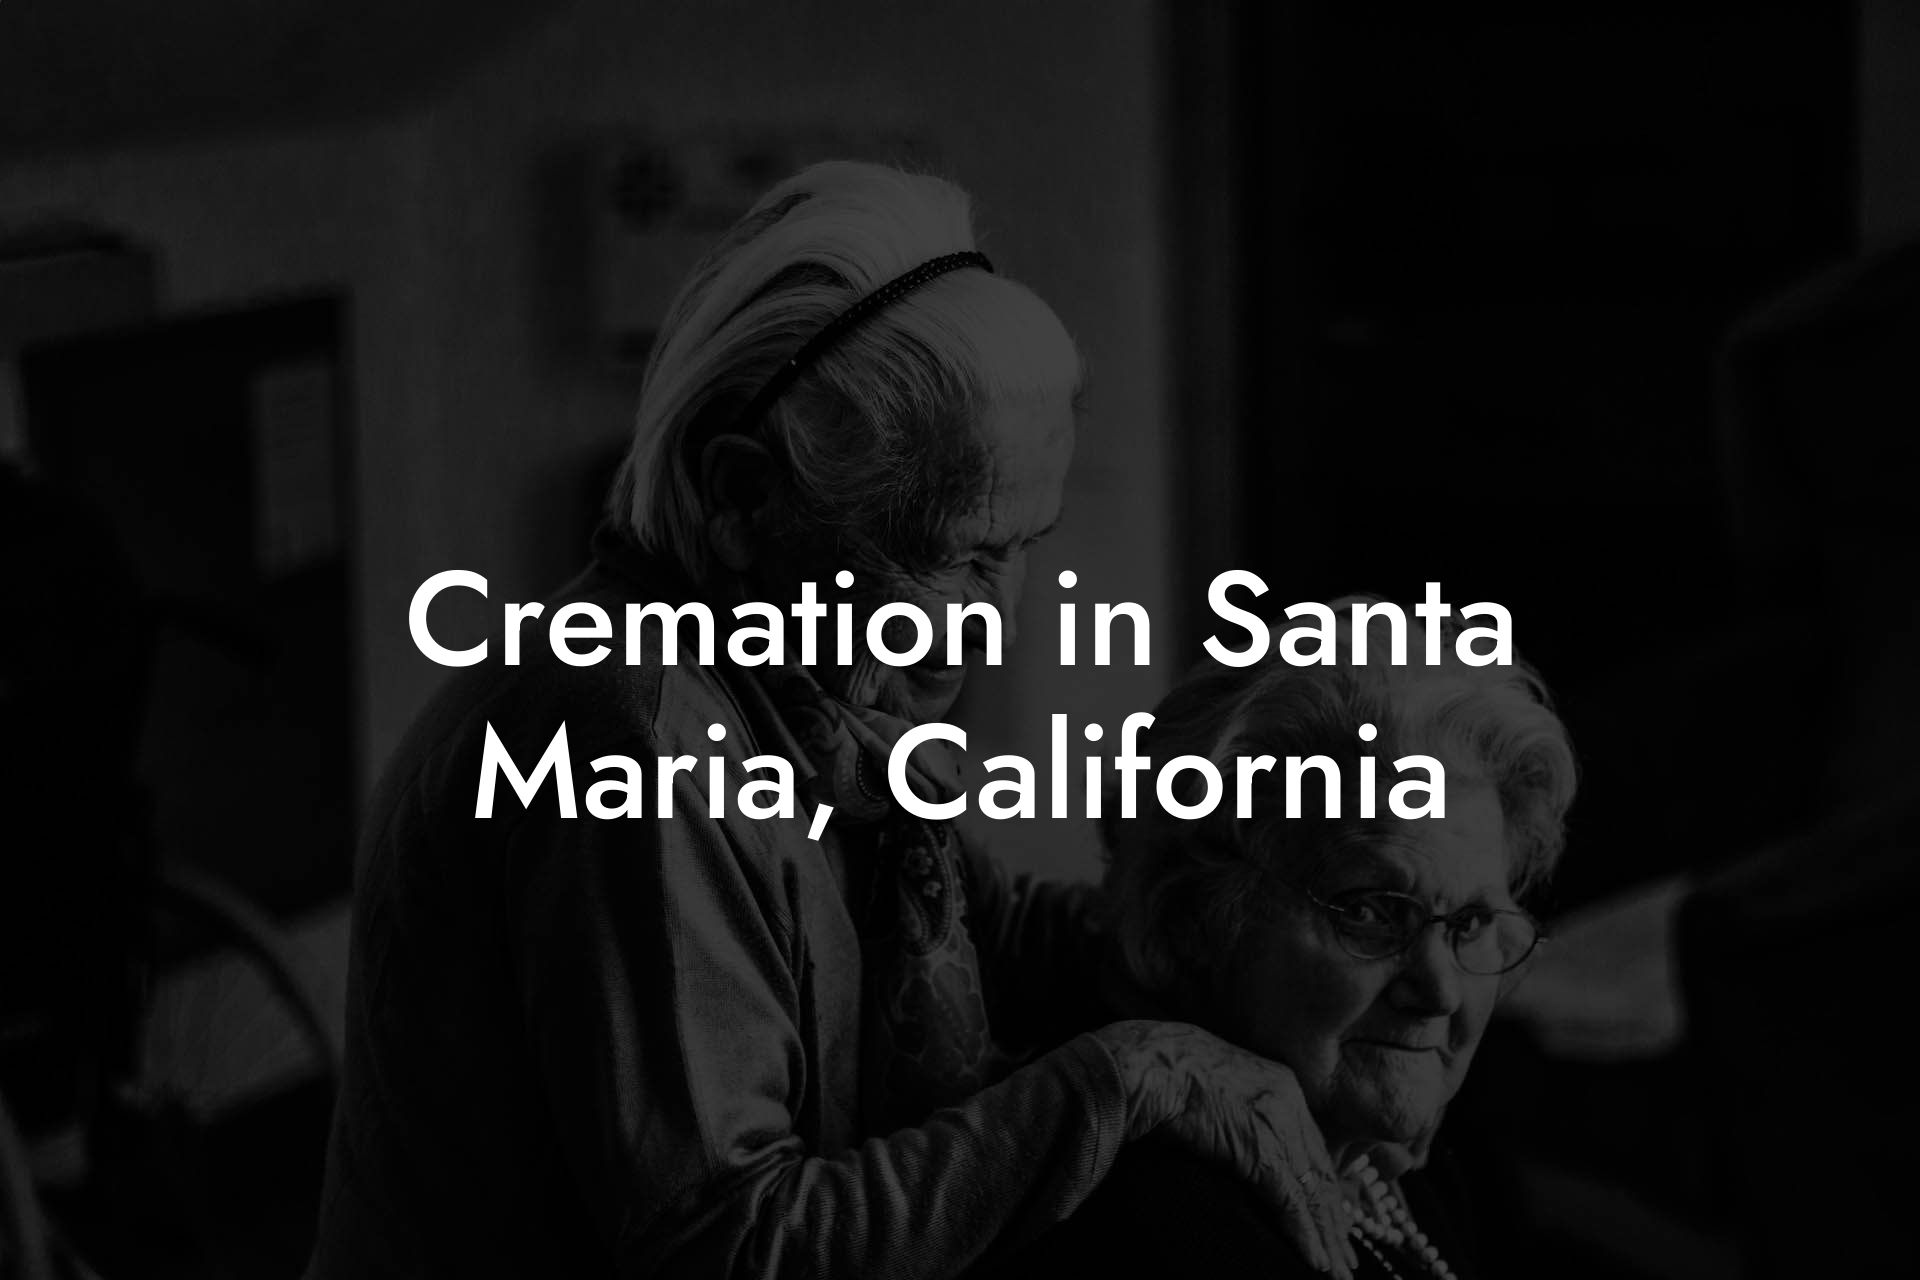 Cremation in Santa Maria, California